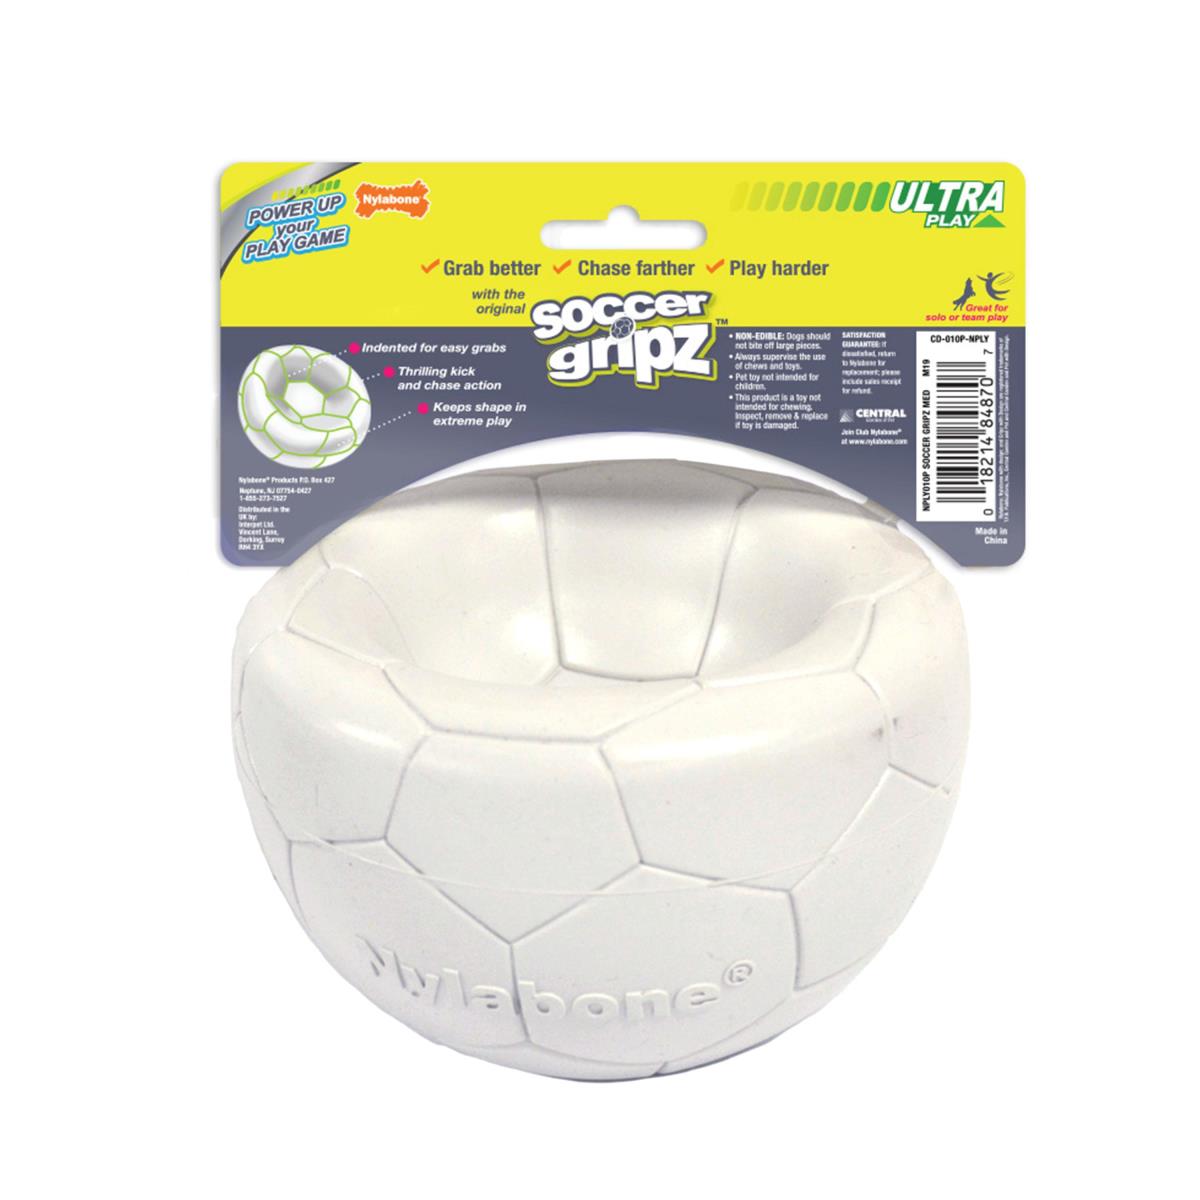 Nylabone - Power Play Gripz Dog Soccer Ball Toy - 0